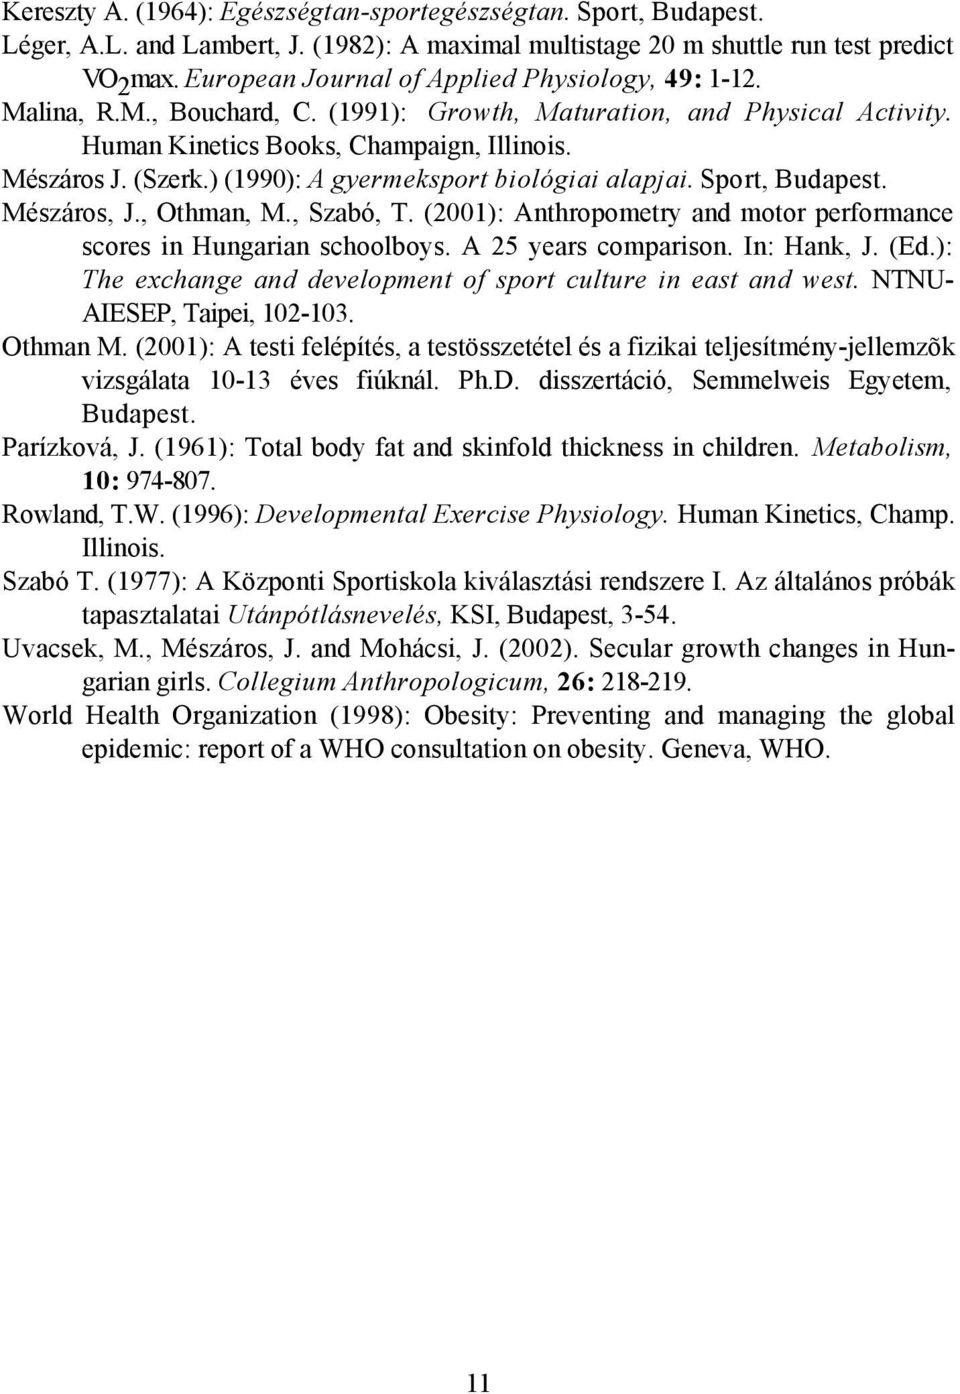 ) (1990): A gyermeksport biológiai alapjai. Sport, Budapest. Mészáros, J., Othman, M., Szabó, T. (2001): Anthropometry and motor performance scores in Hungarian schoolboys. A 25 years comparison.